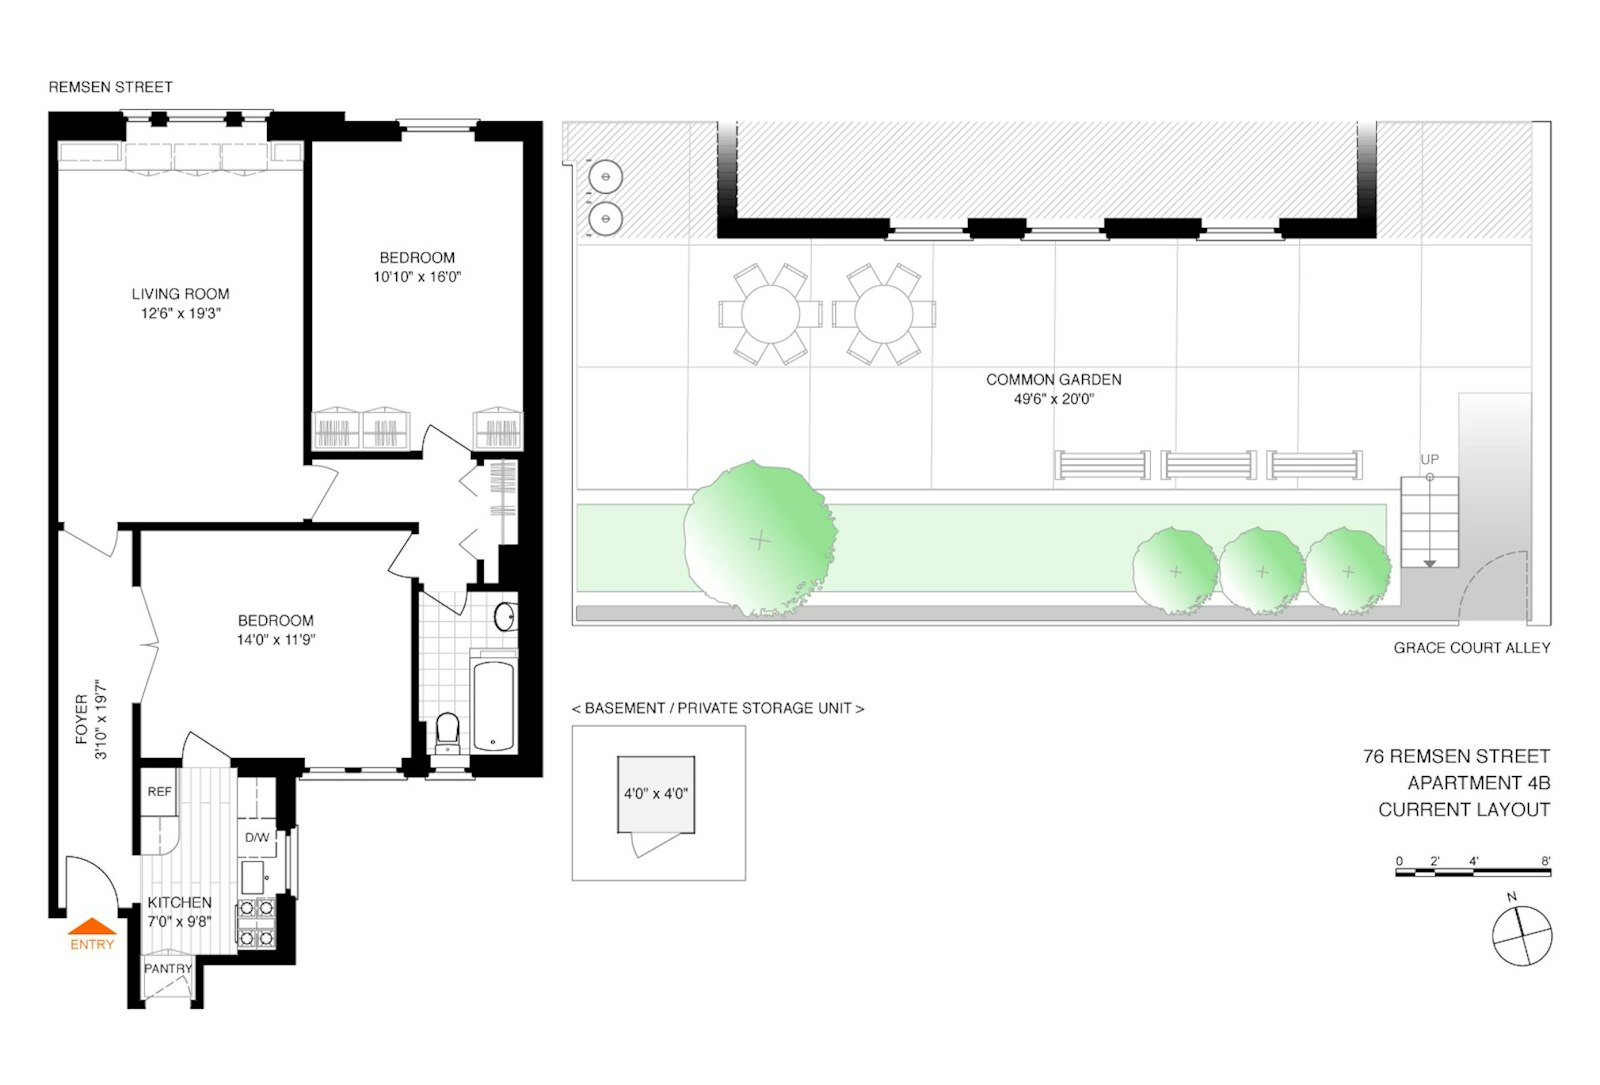 Floorplan for 76 Remsen Street, 4B